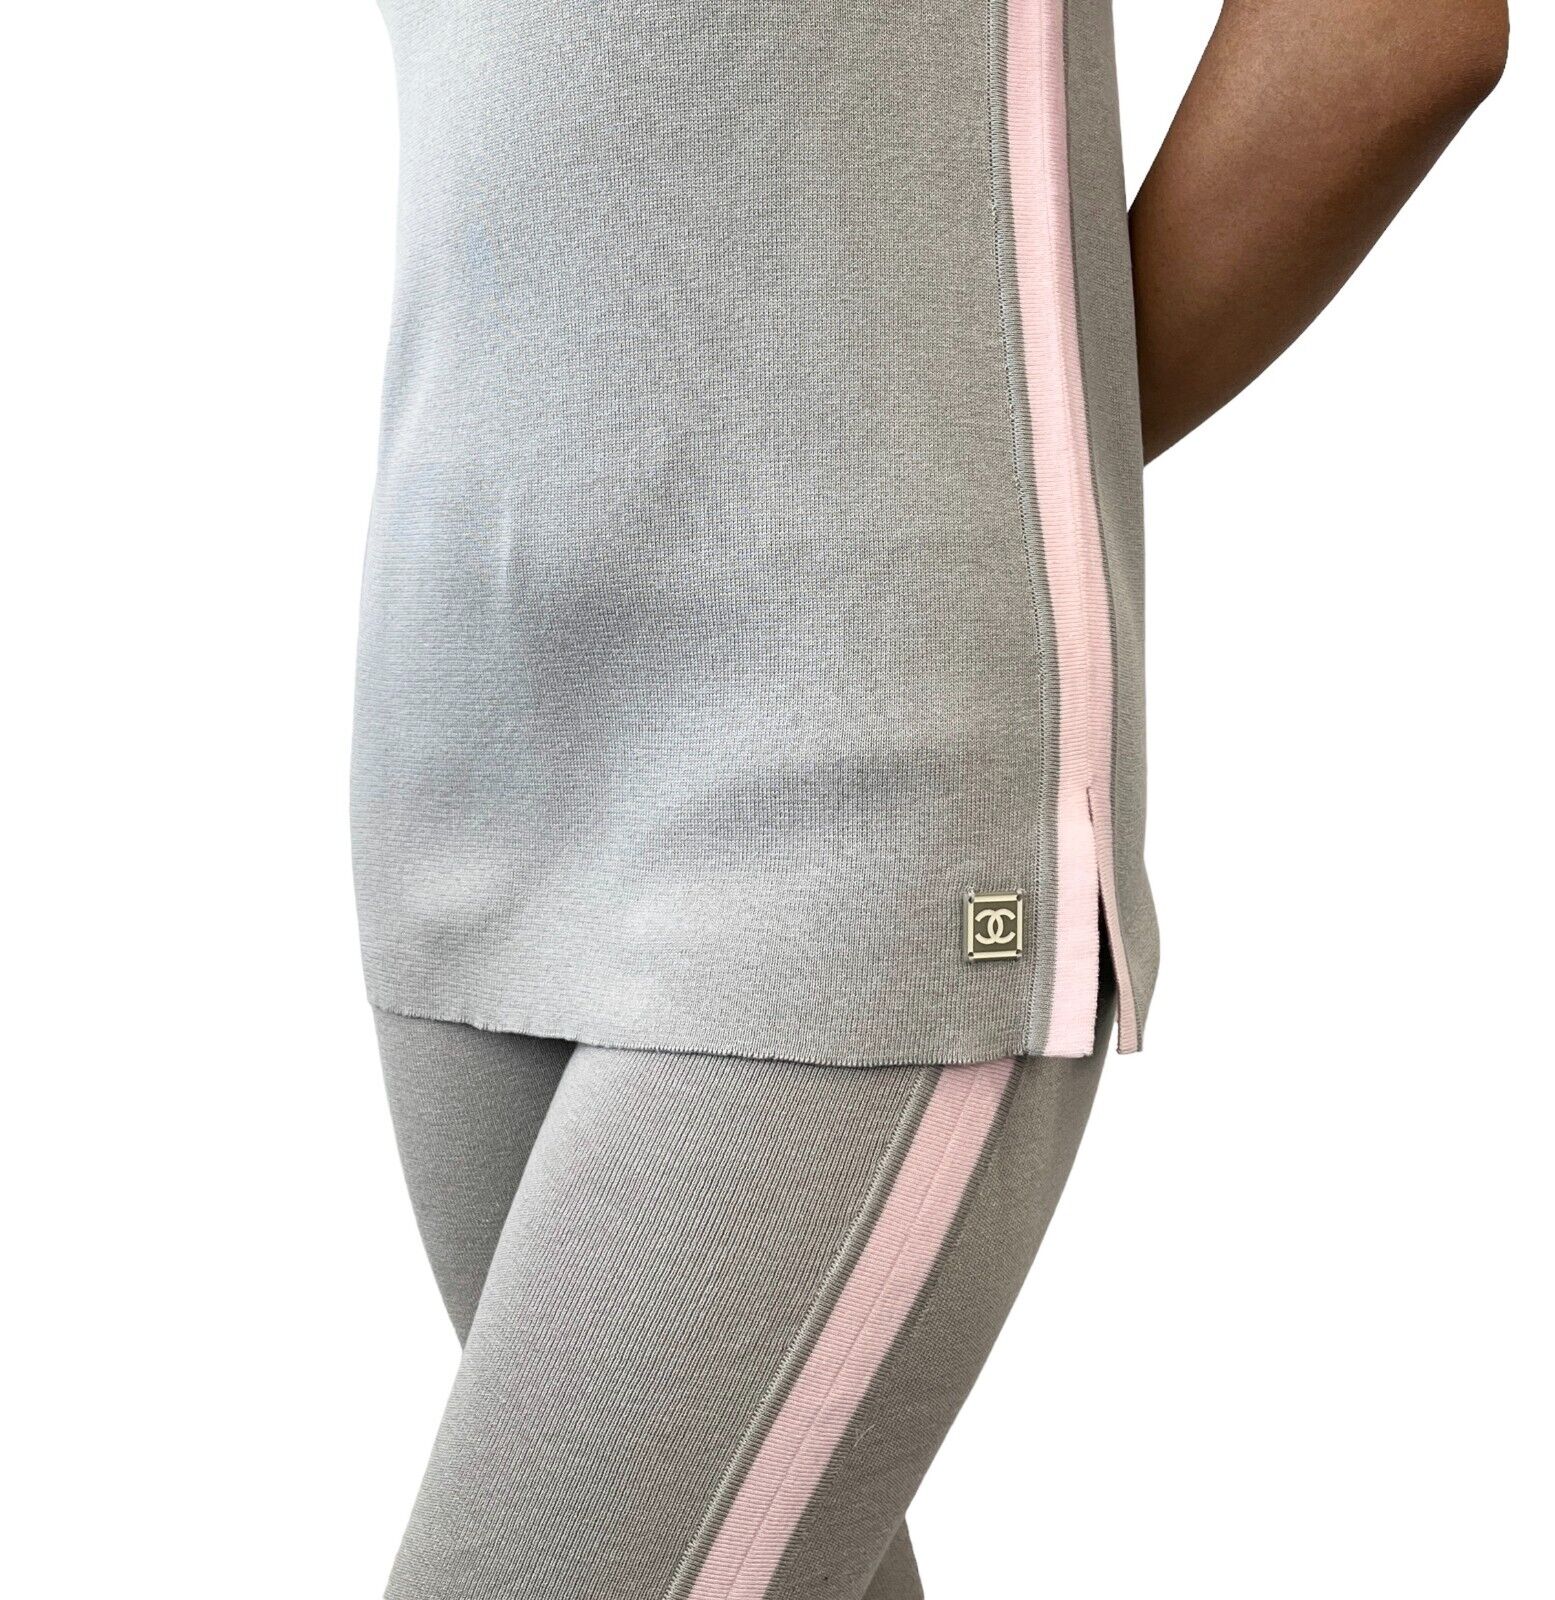 CHANEL Vintage 03P CC Mark Logo Knit Top Pants Set #38 Gray Pink Cotton Rank AB